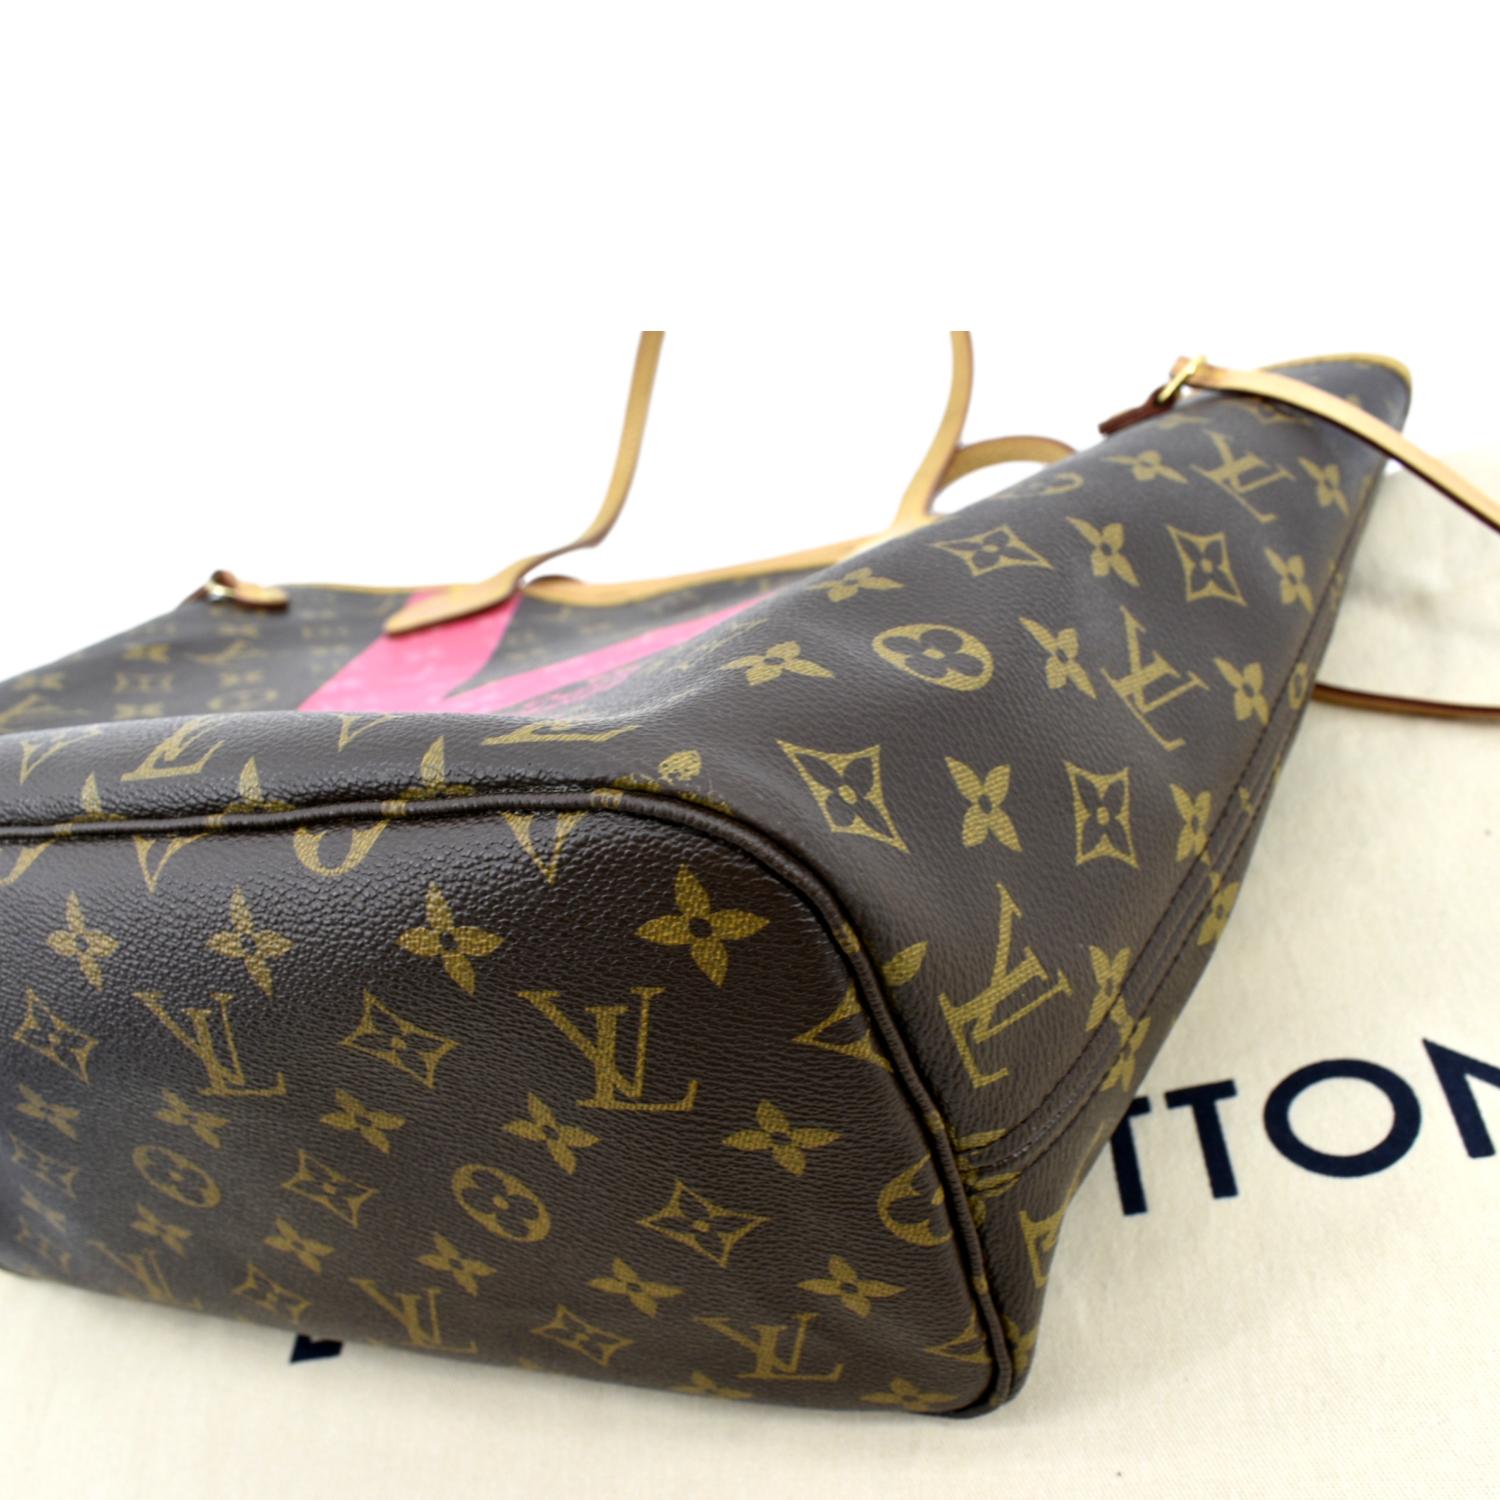 Louis Vuitton Neverfull MM Mon Monogram Canvas Tote Bag